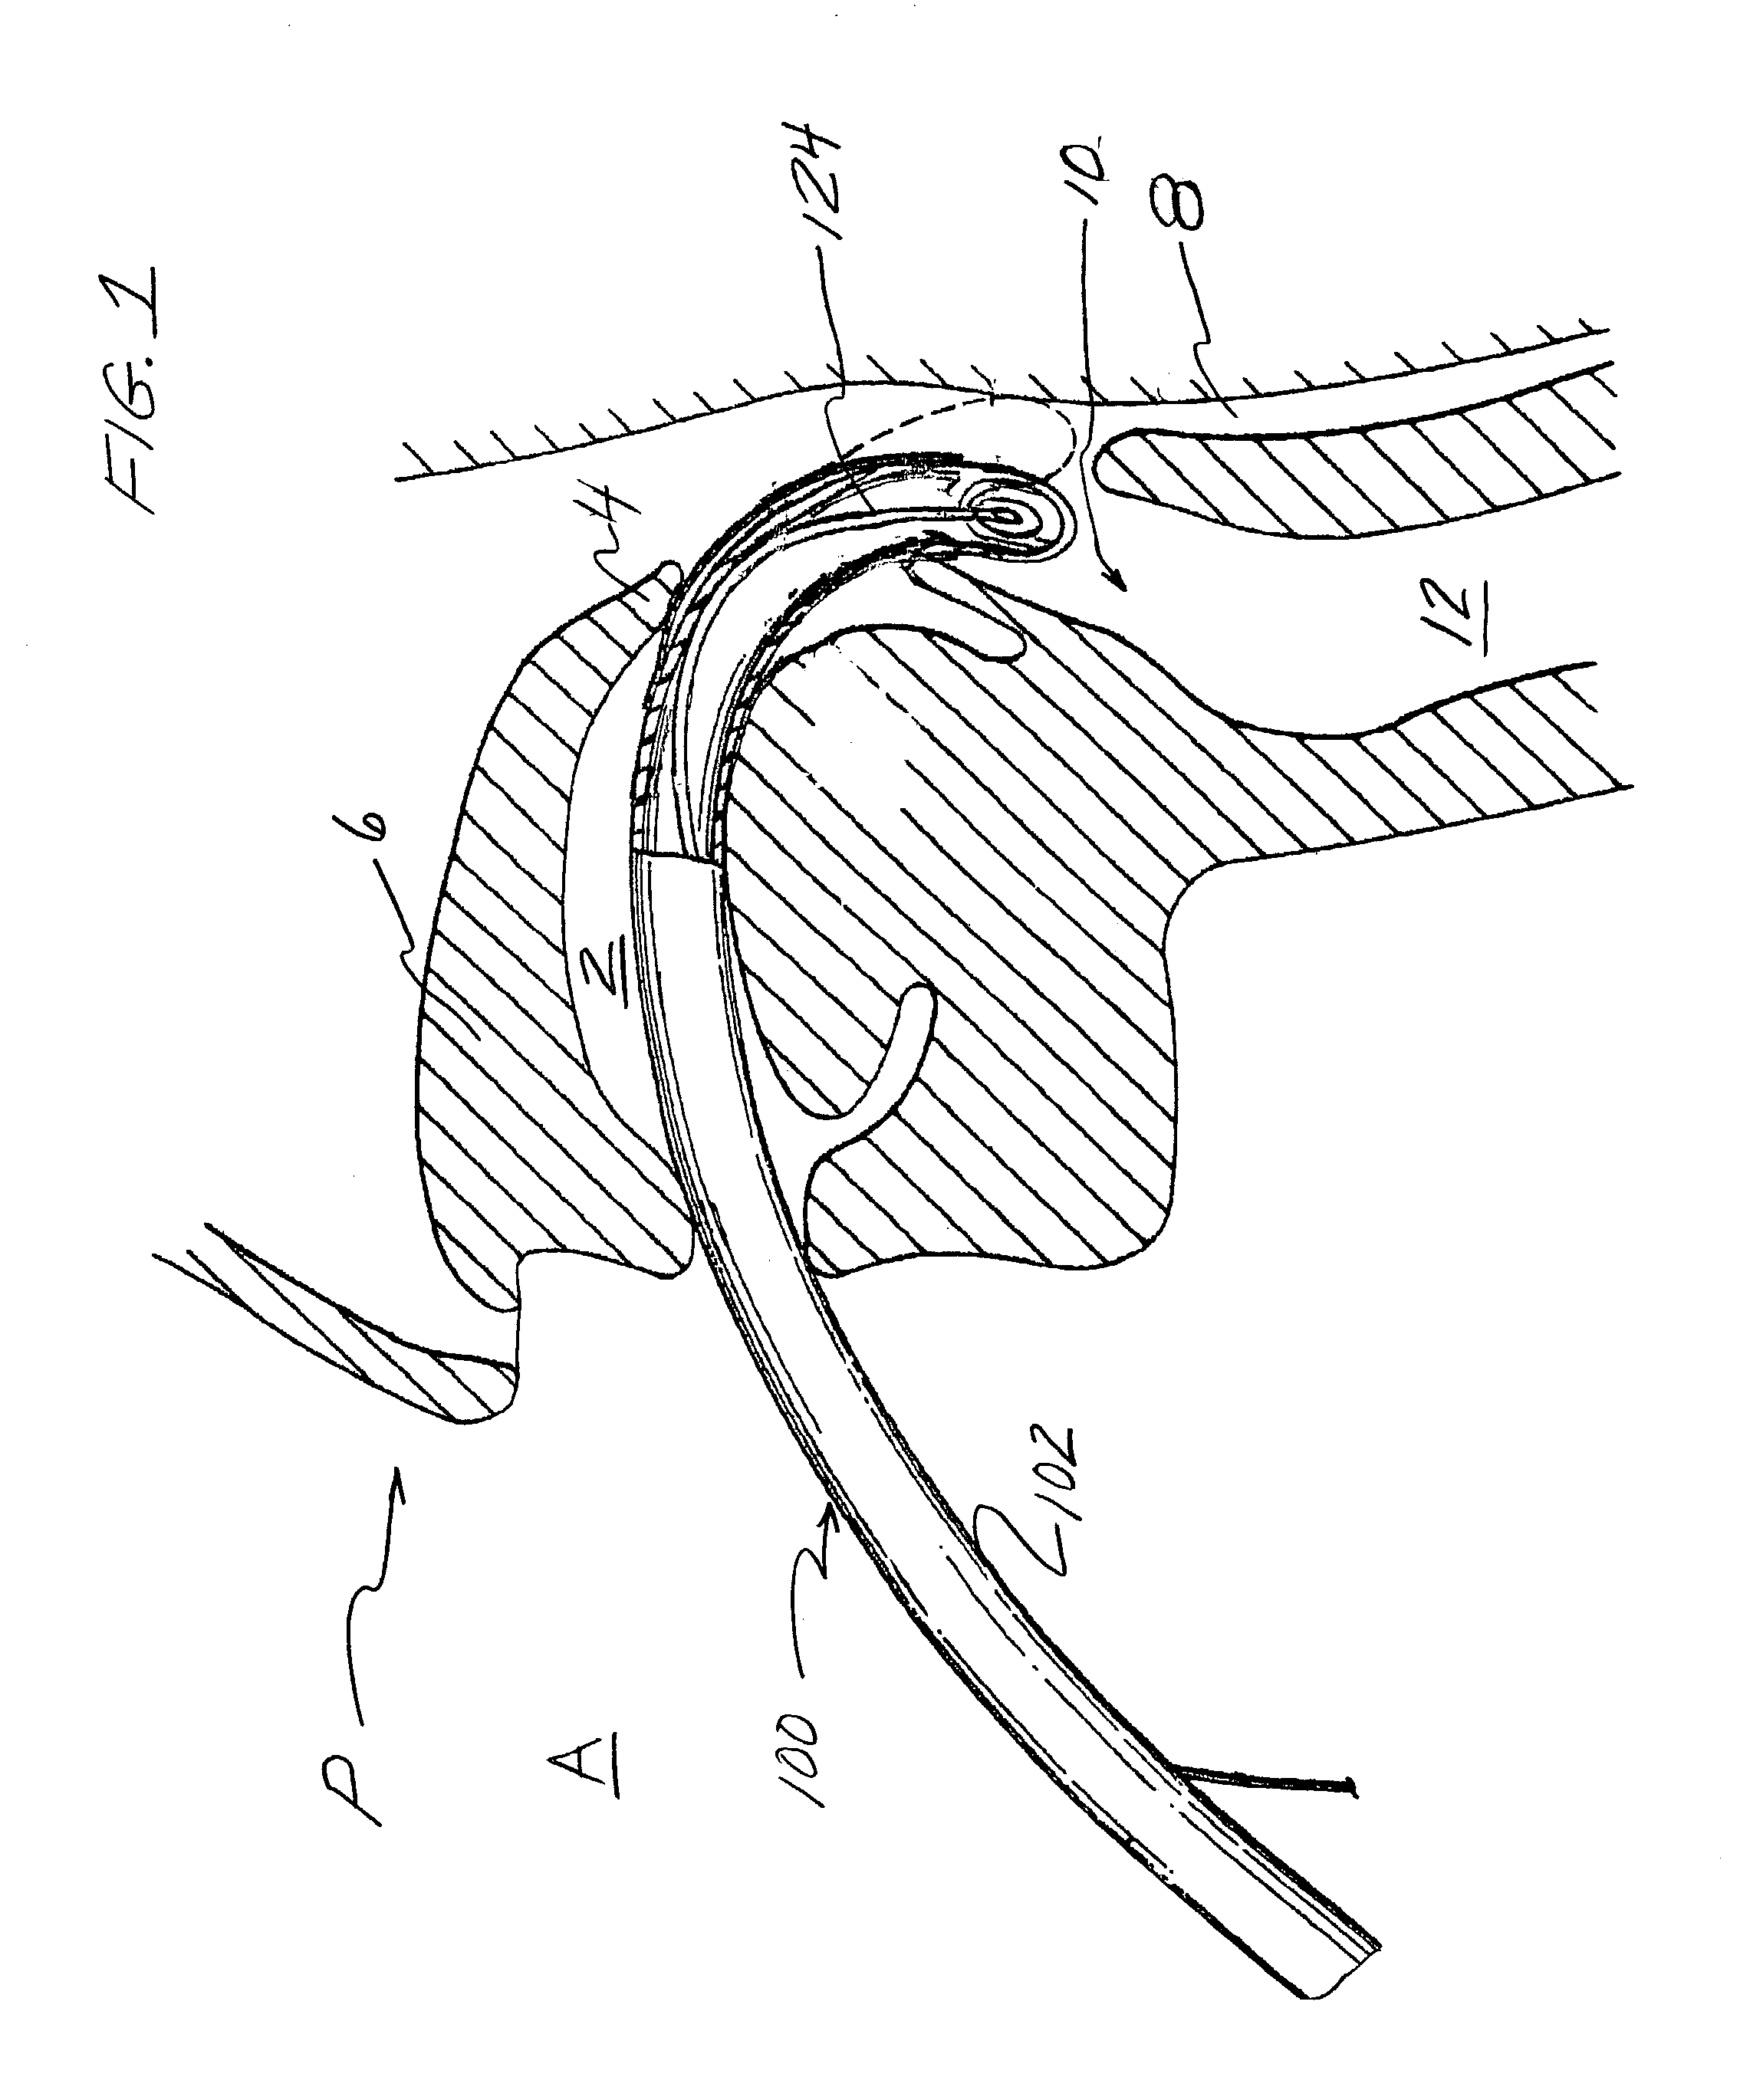 Intubation device